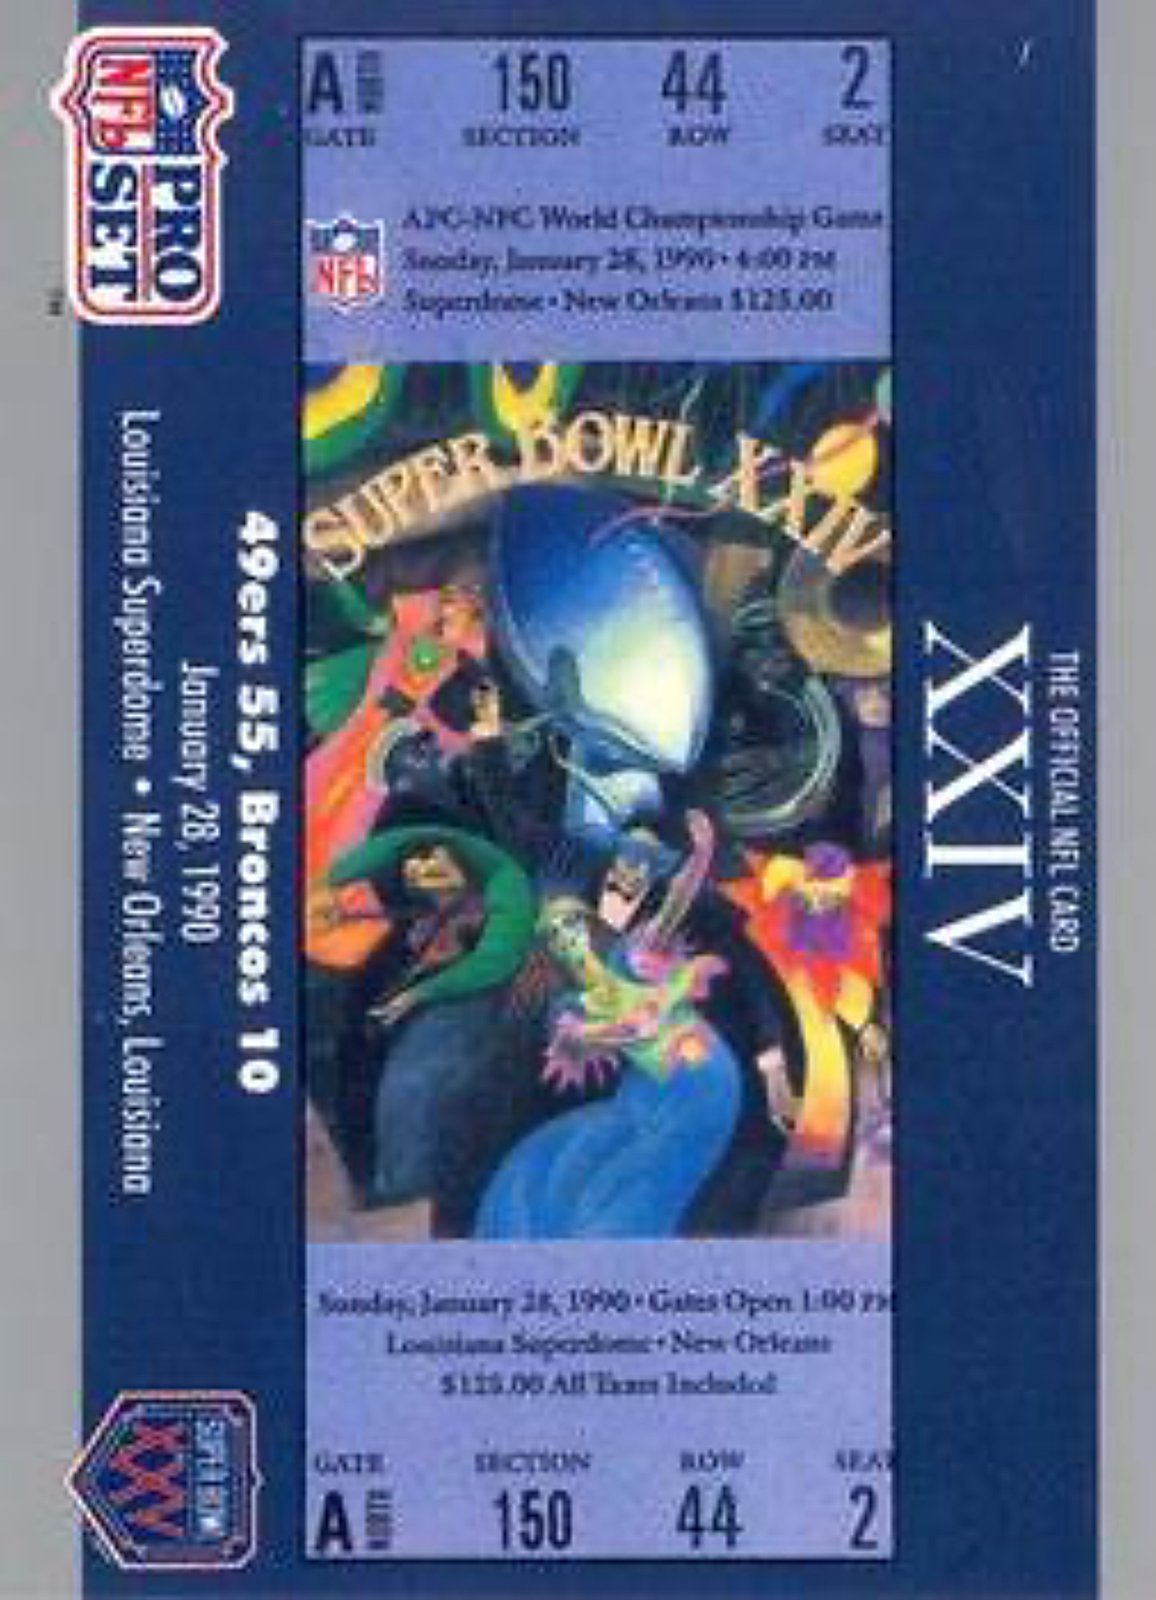 1990-91 Pro Set Super Bowl 160 Football 24 SB XXIV Ticket